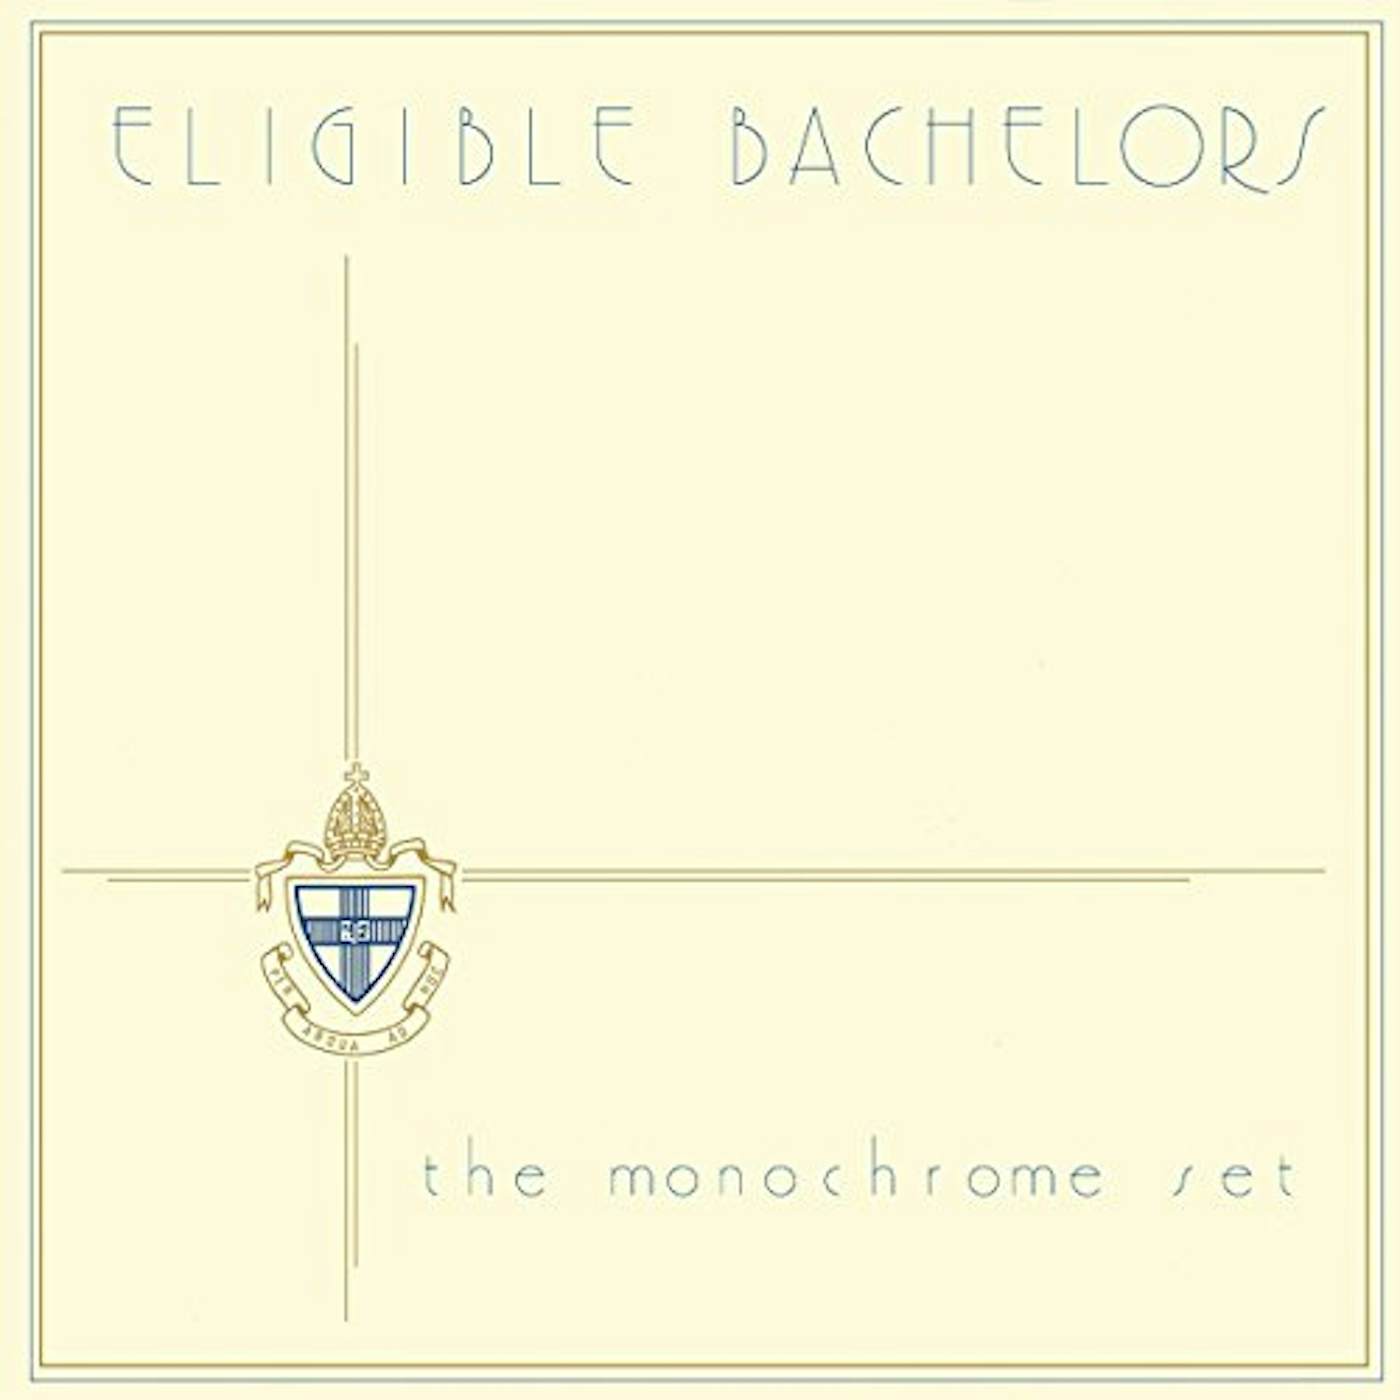 The Monochrome Set Eligible Bachelors Vinyl Record